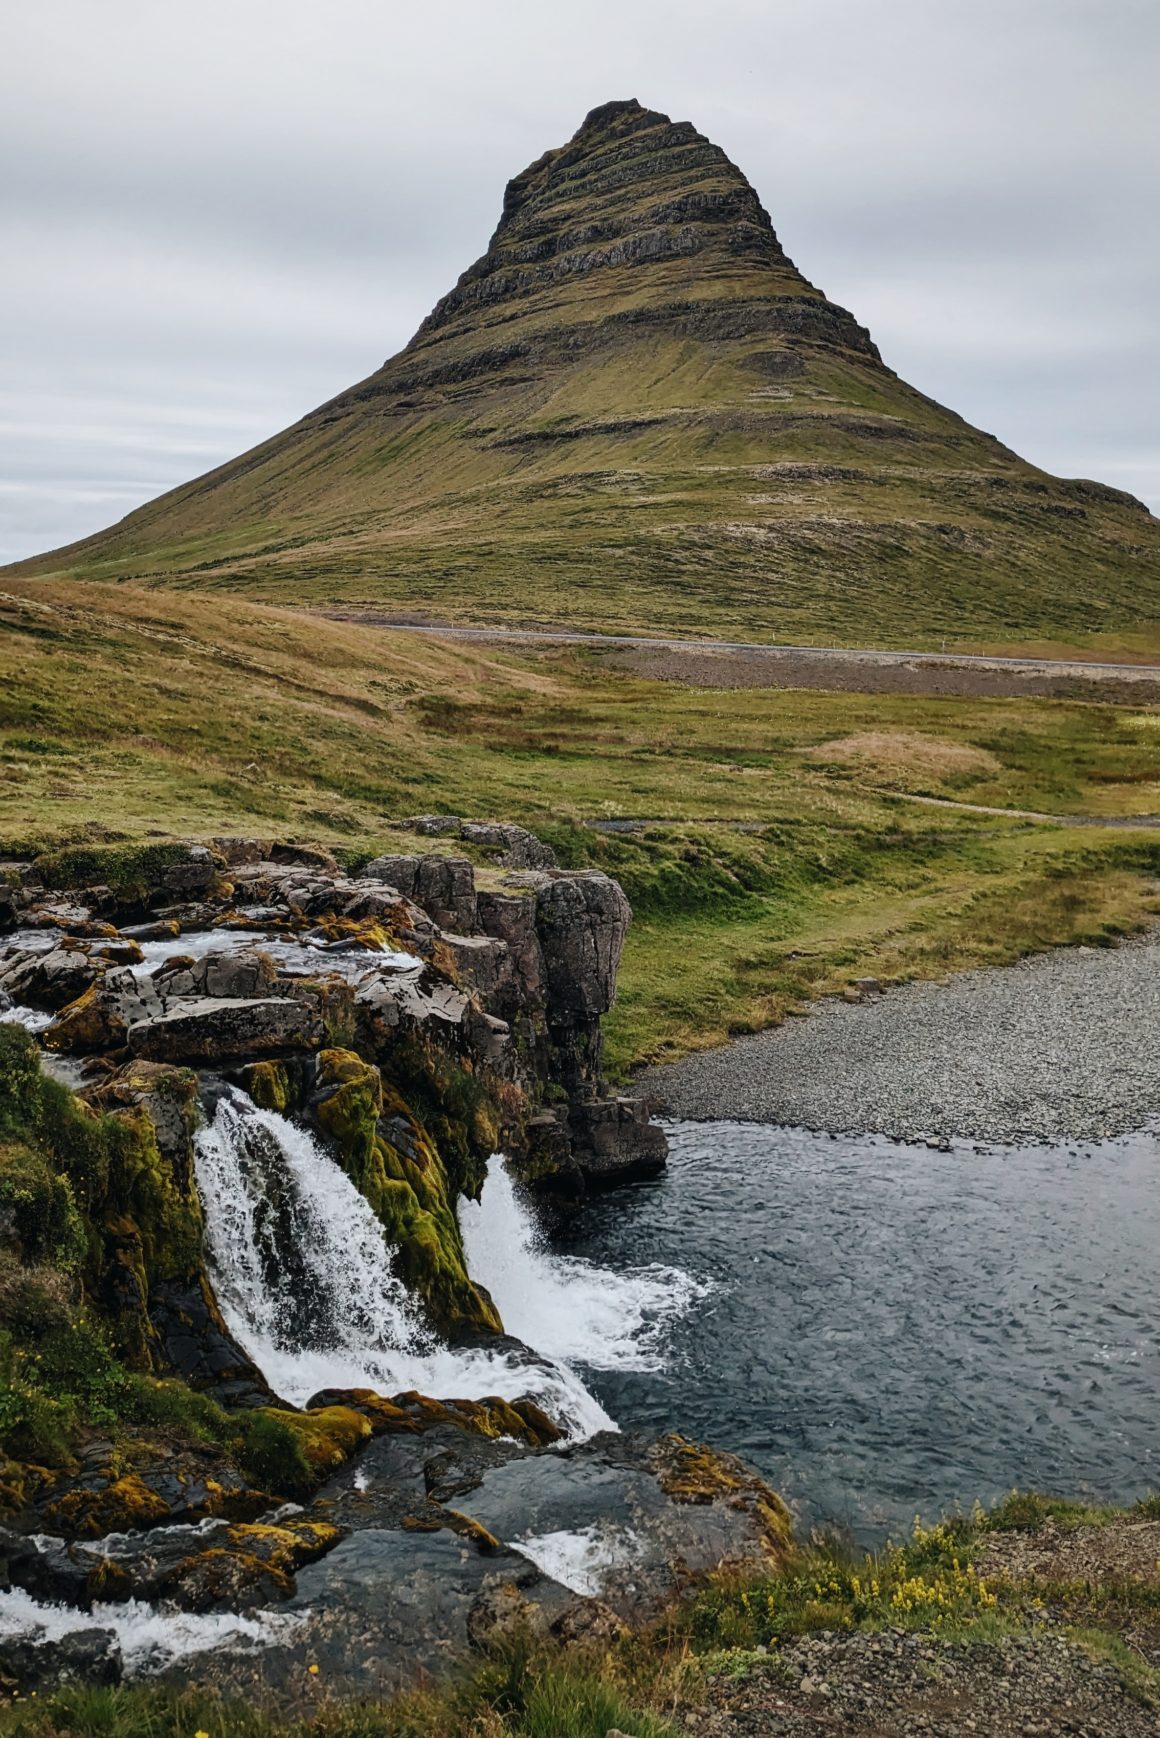 blog voyage en Islande en famille